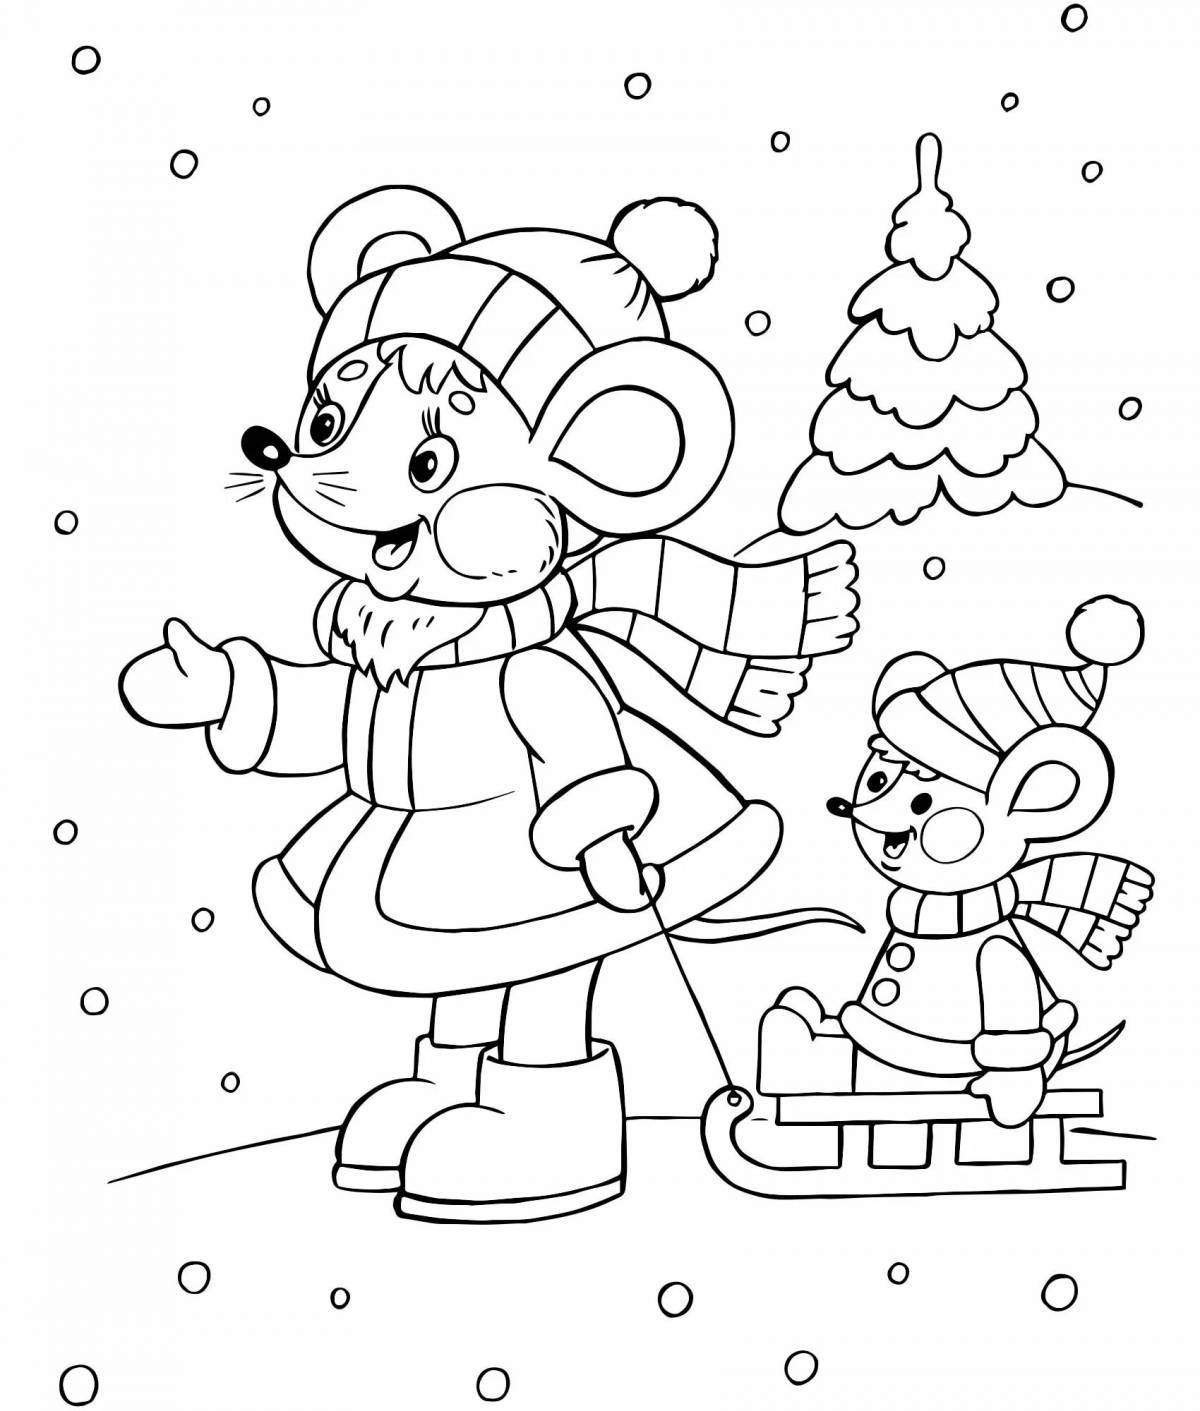 Fun coloring book winter for kids 4 5